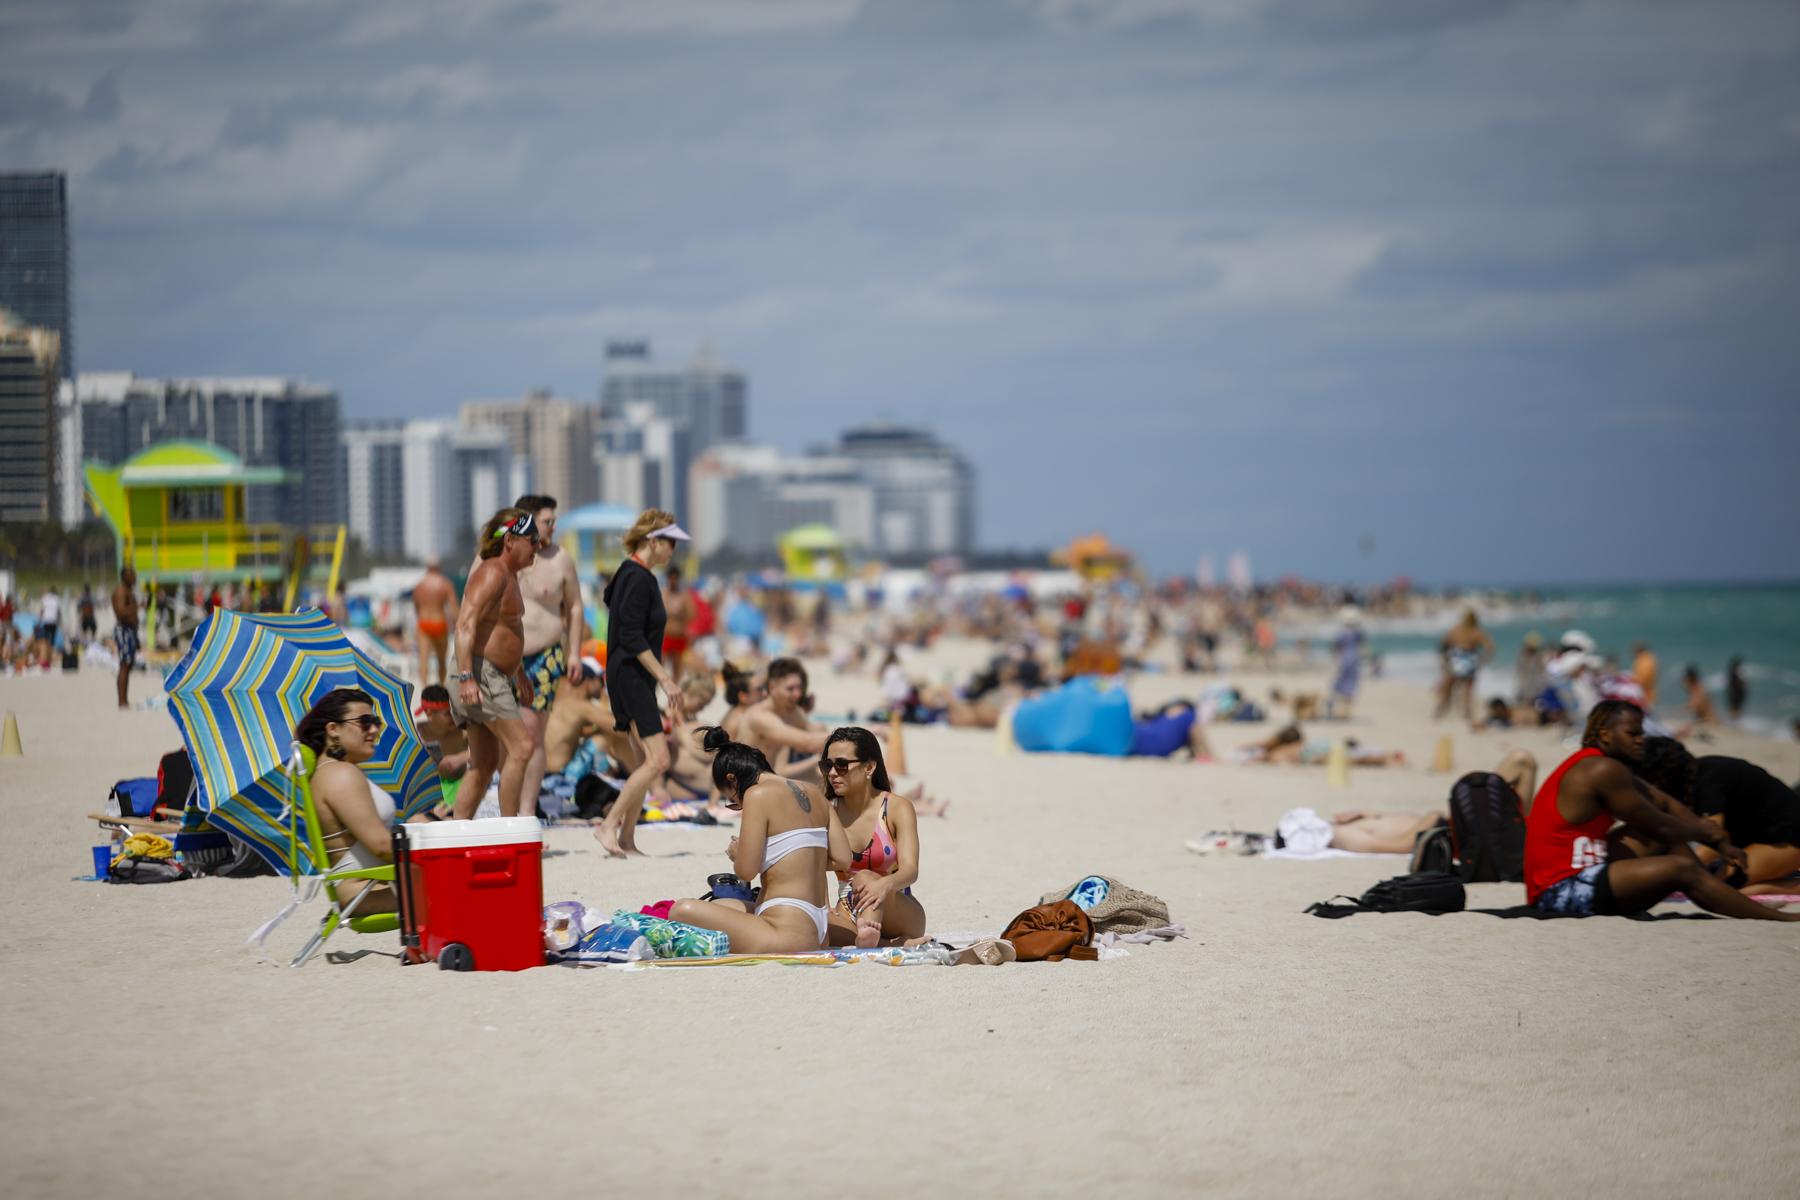 2021 - Spring Break @ Miami Beach - People sit on the beach during Spring Break in Miami...